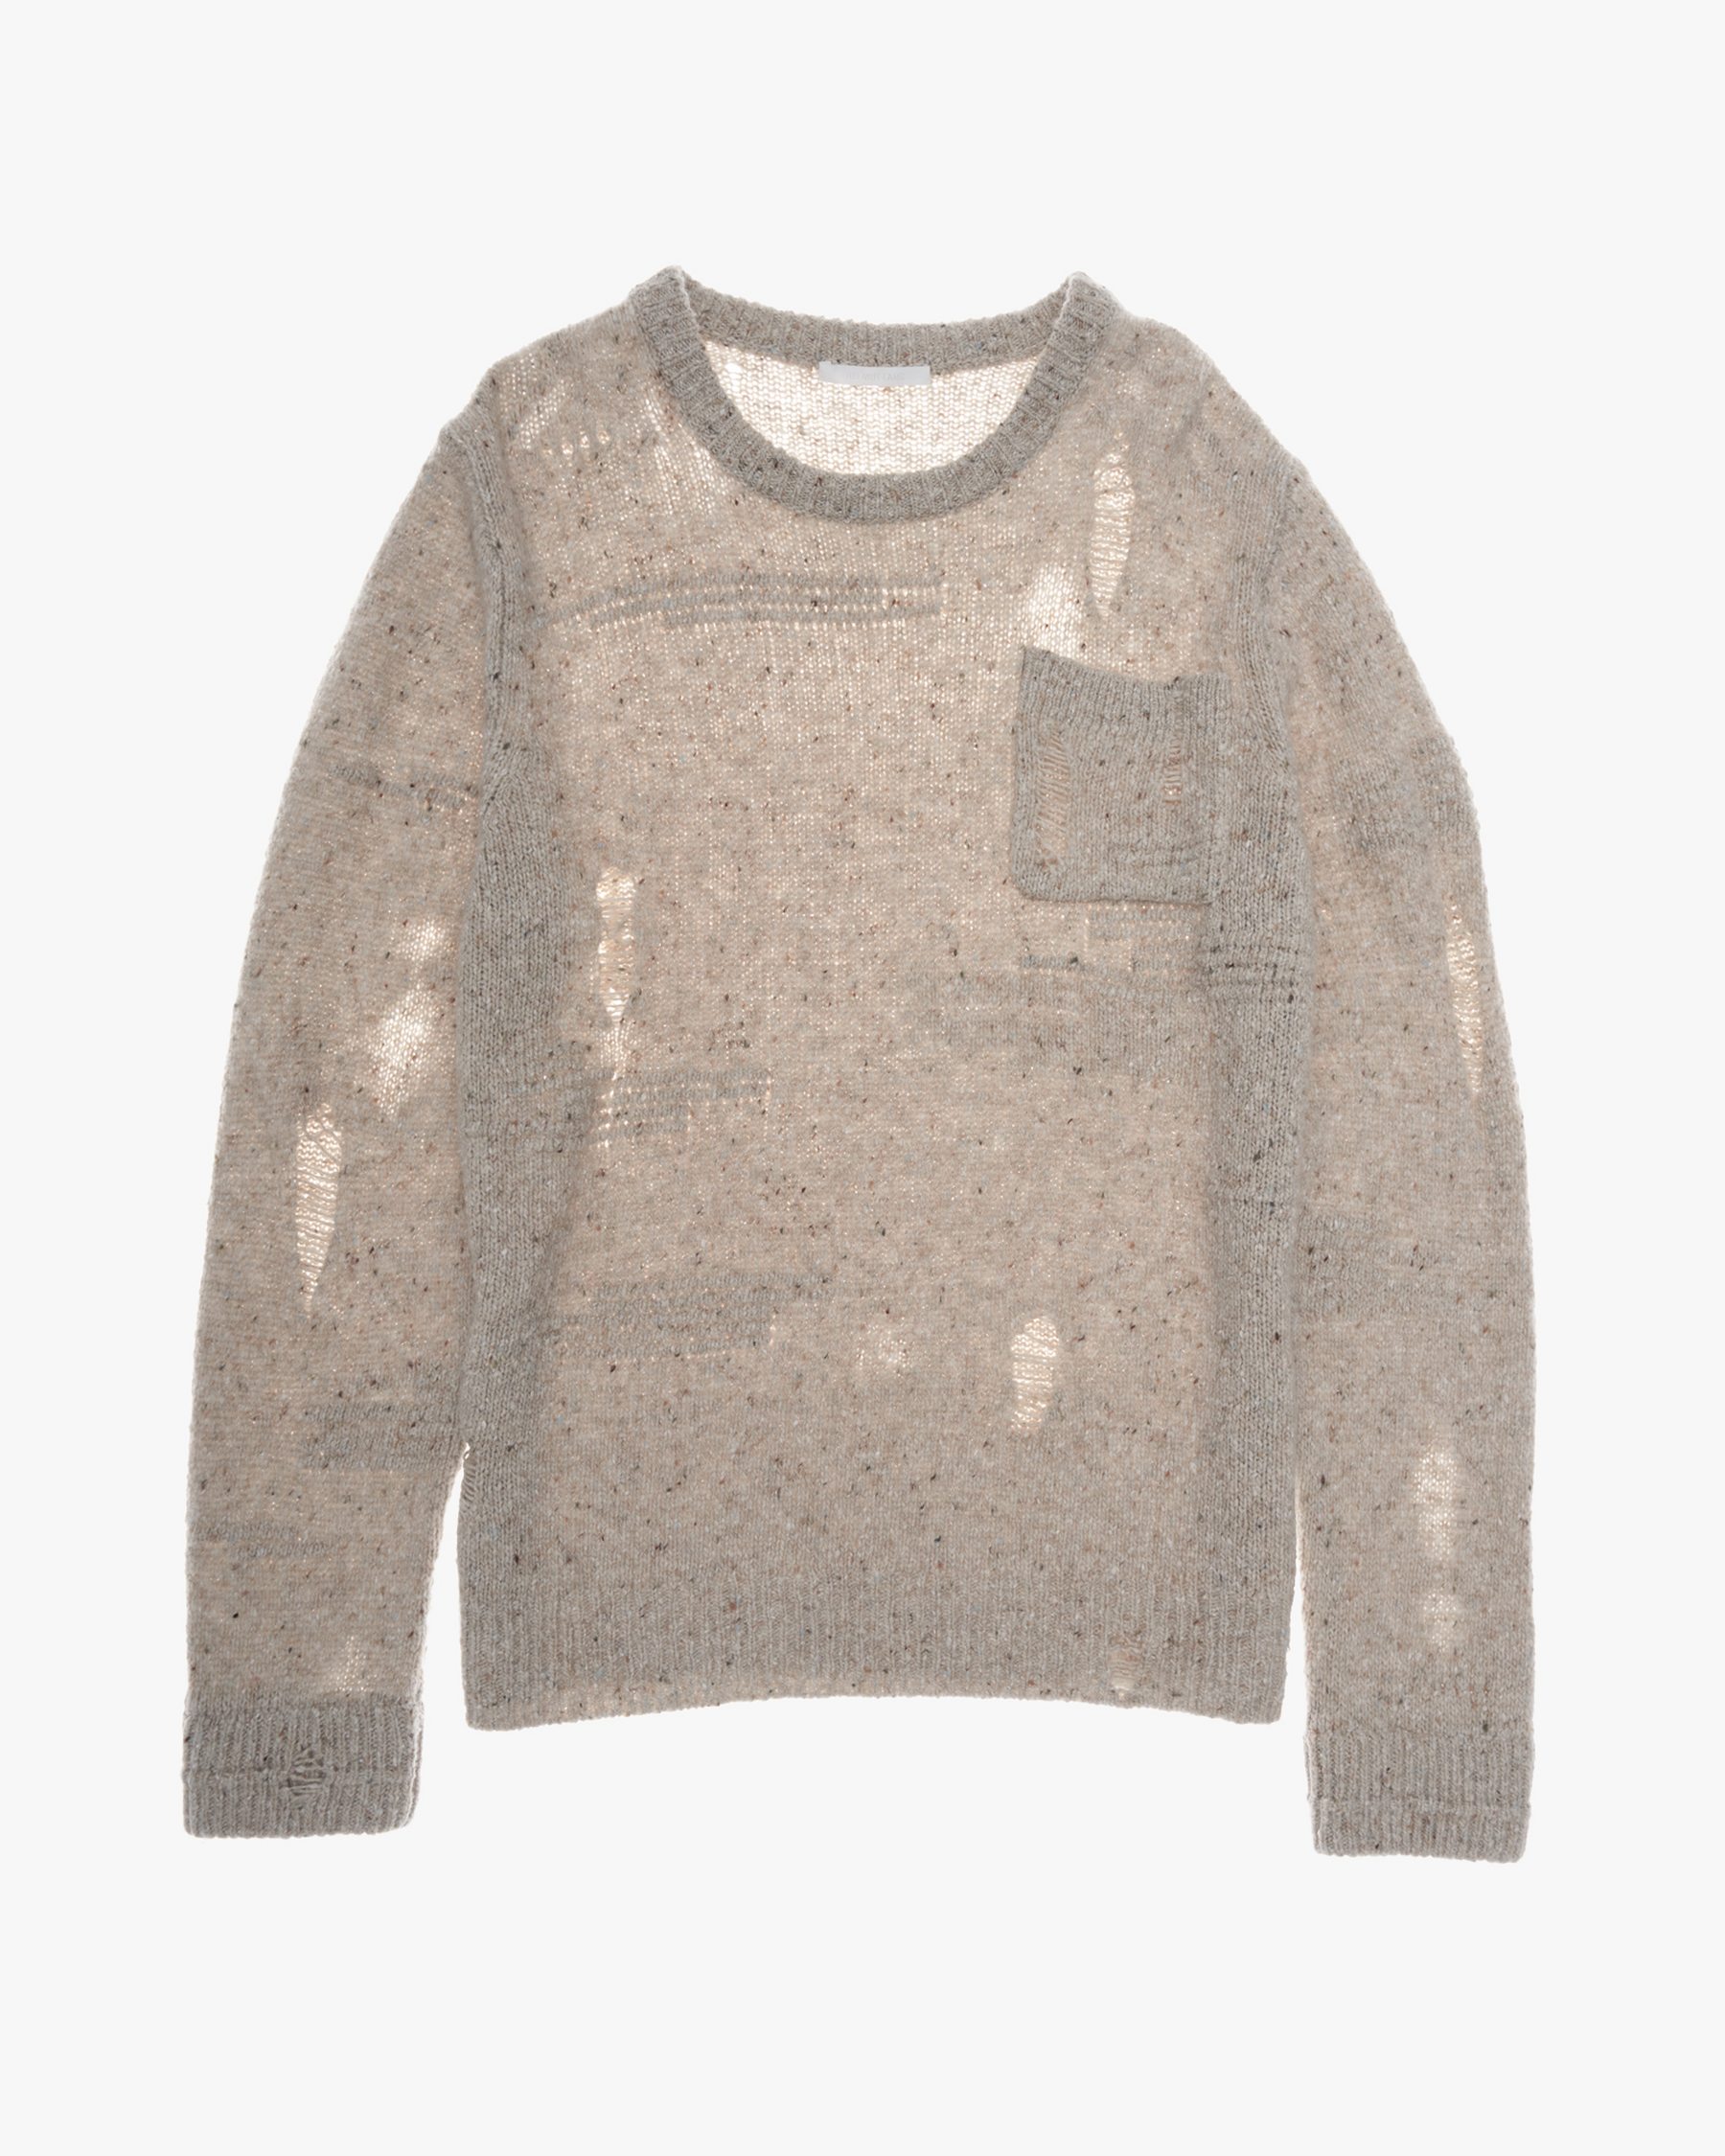 Distressed Sweater